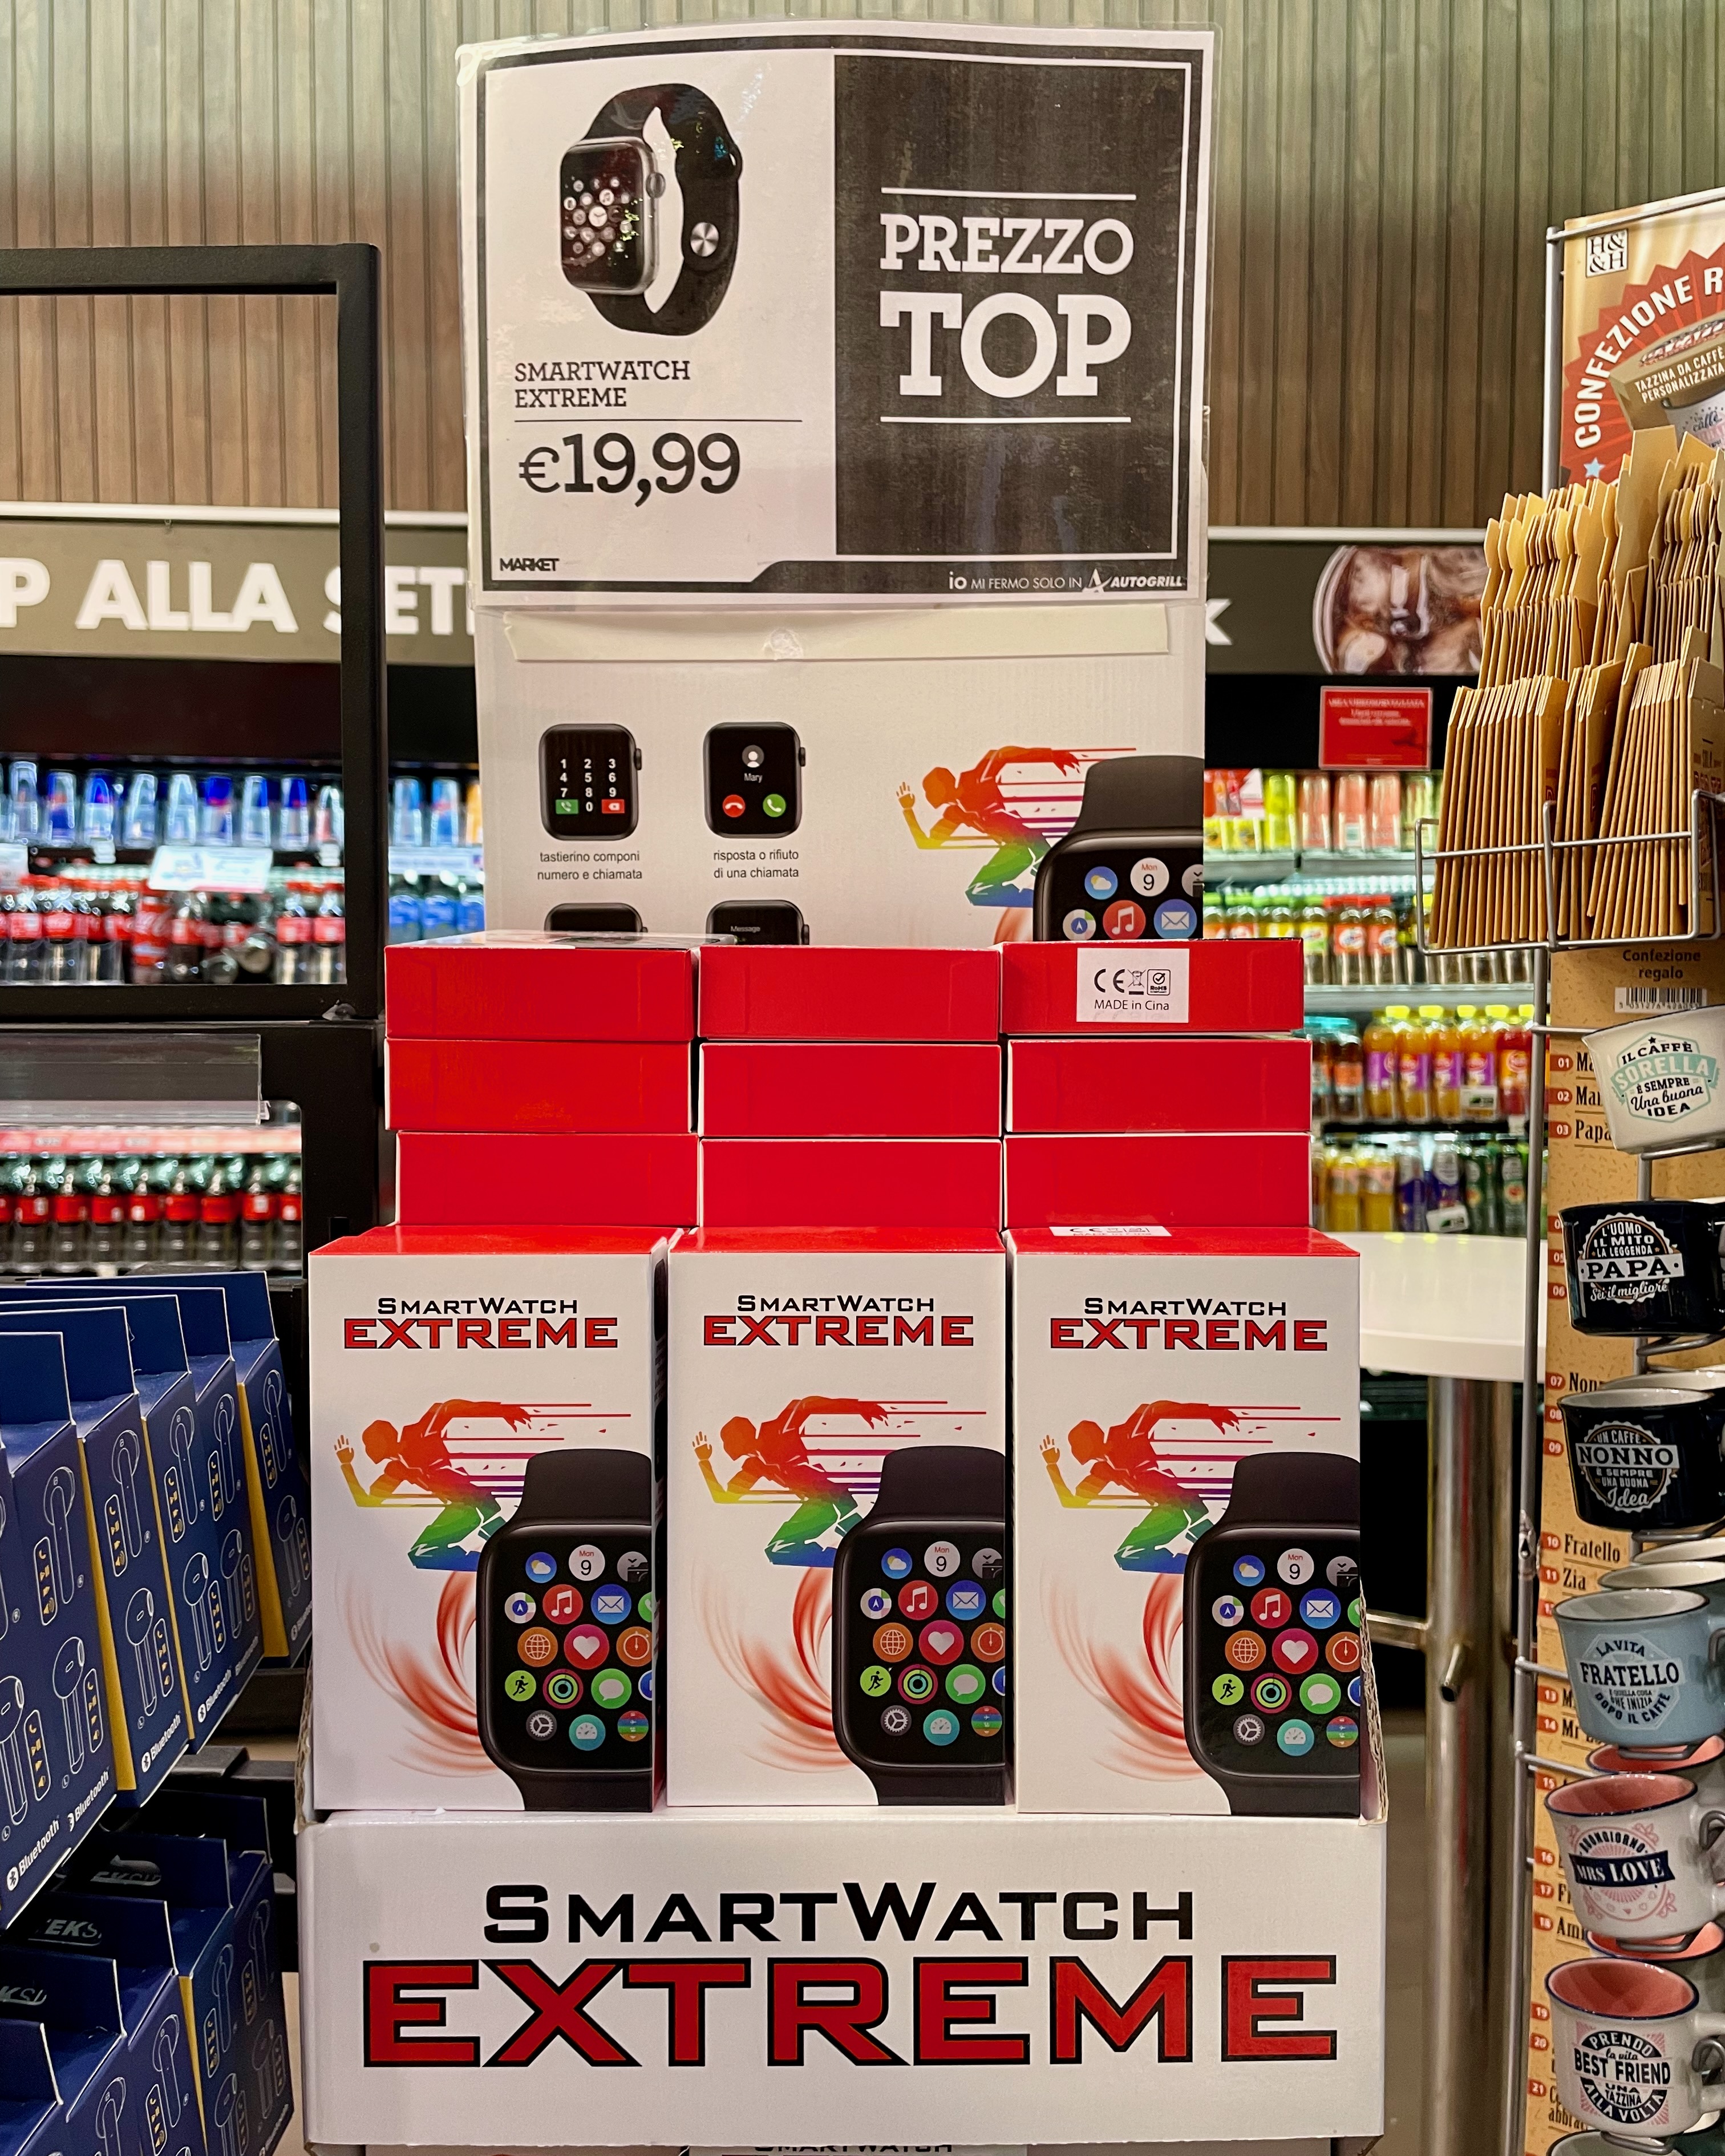 Smartwatch Extreme, uguale preciso ad Apple Watch, in vendita a 19,99 euro